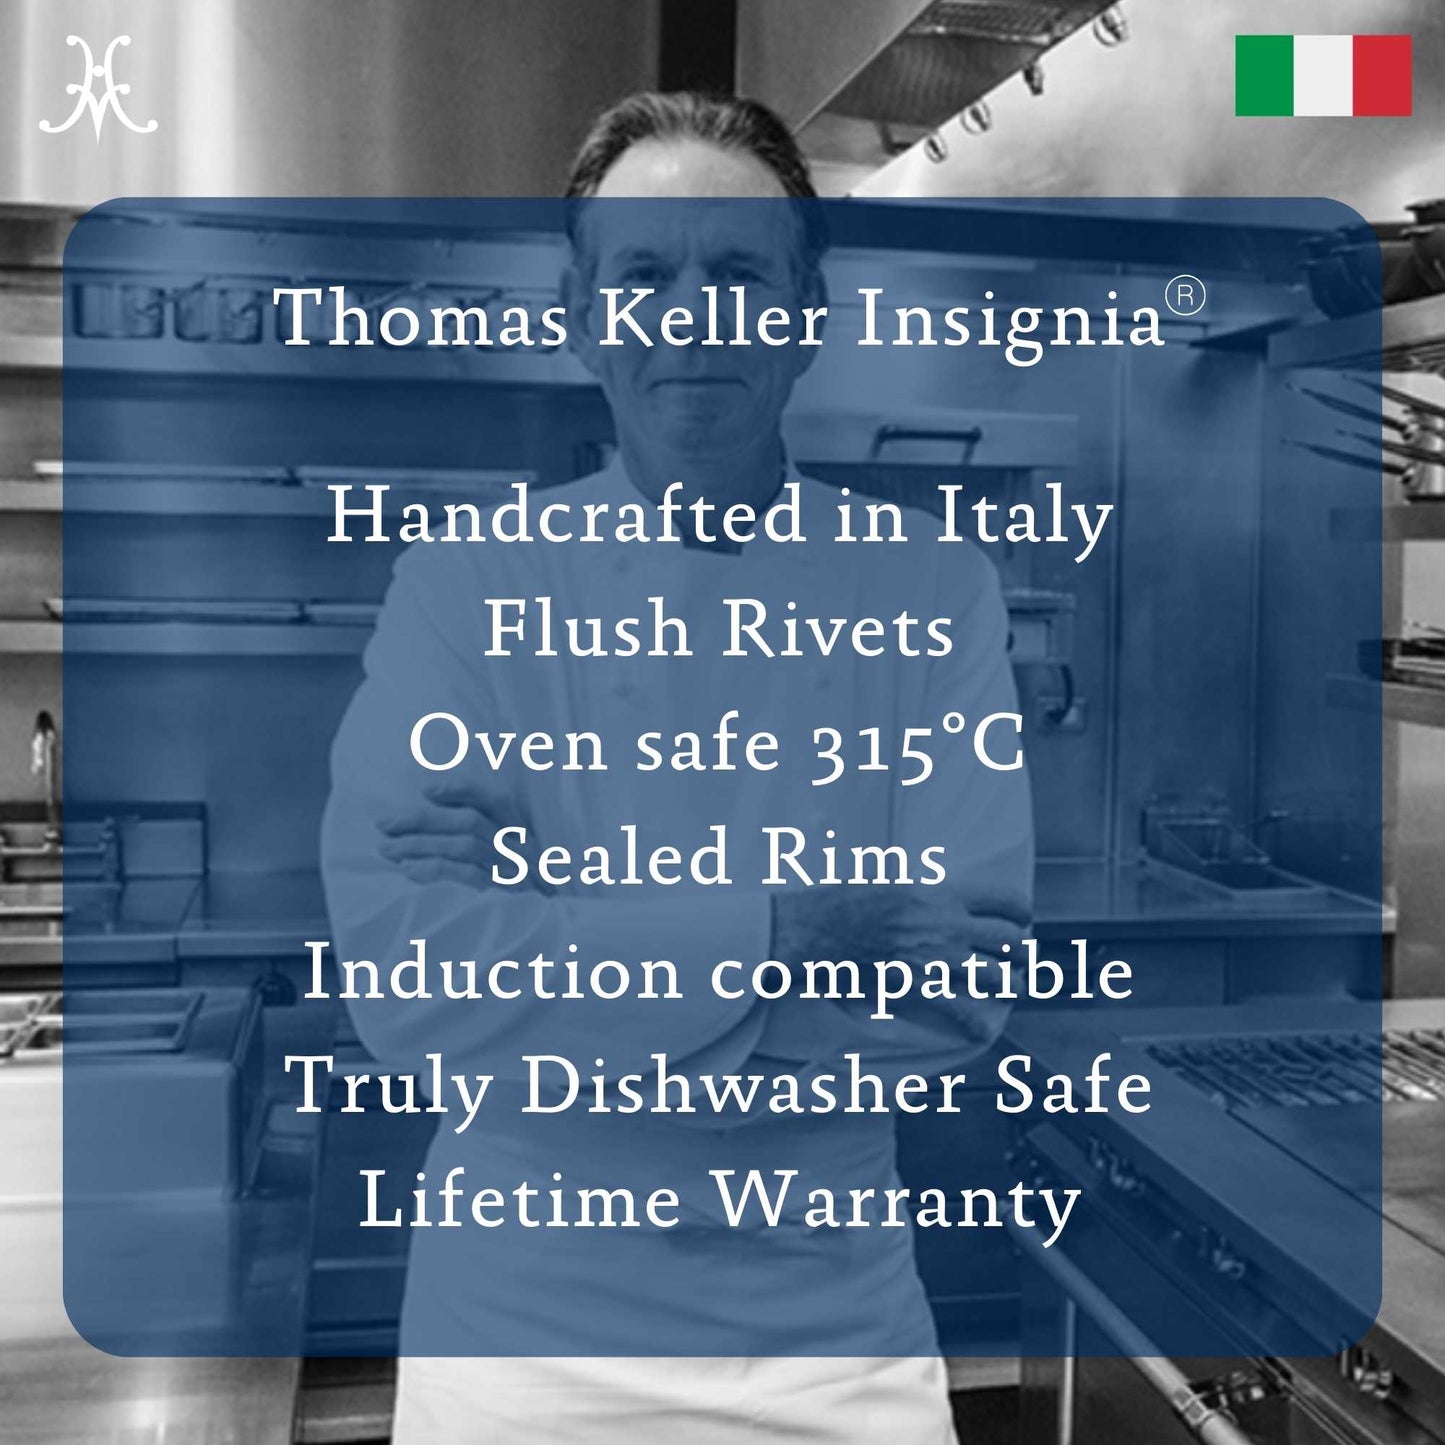 Hestan Thomas Keller Insignia Commercial Clad Stainless Steel Open Saucepan 20cm/2.8L